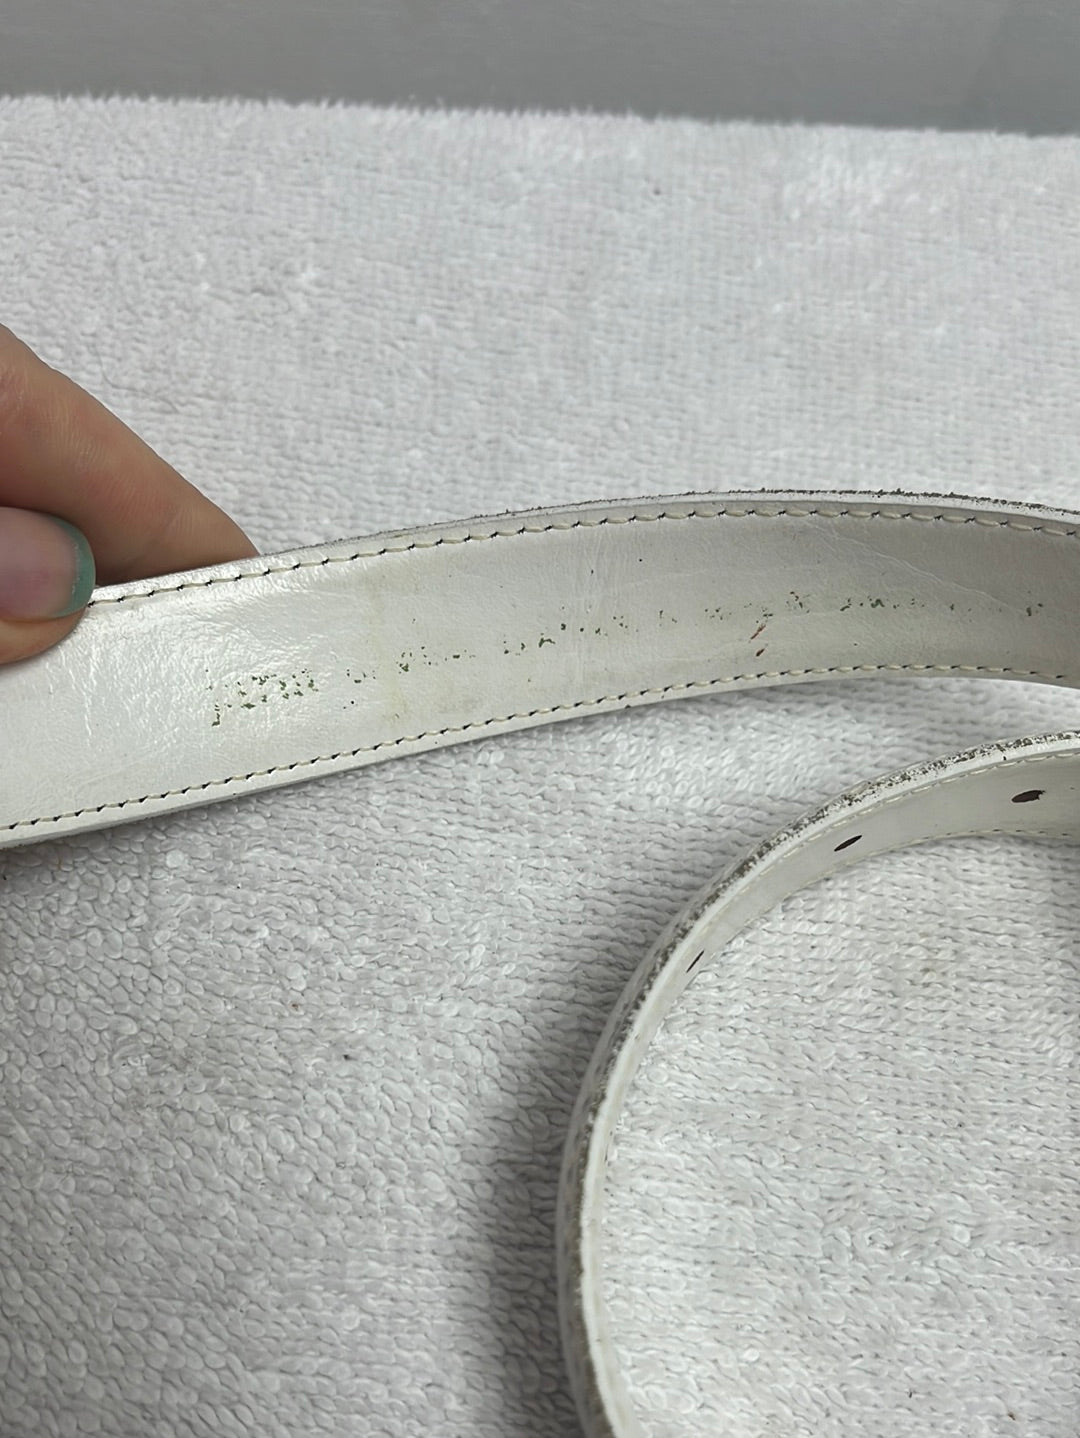 VTG -- AMANDA SMITH White Southwestern Style Belt w/ Silvertone Buckle and Details -- 33.5 inches